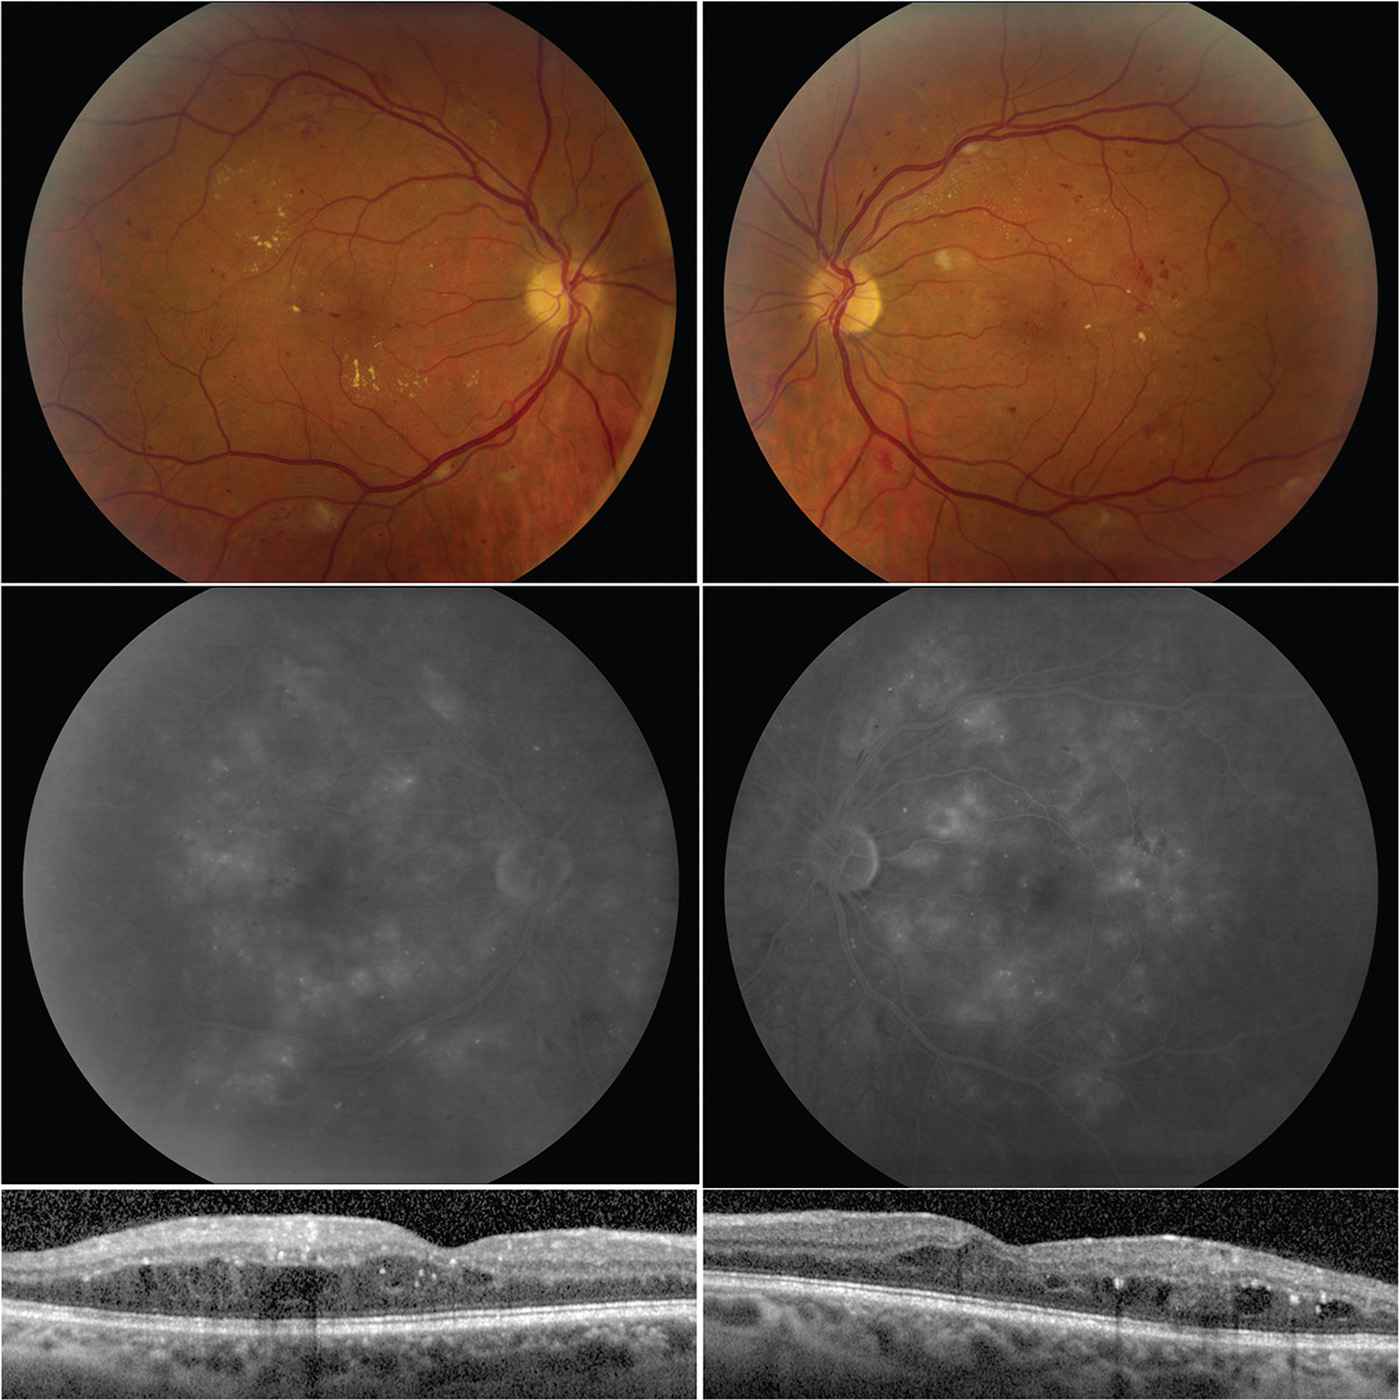 retina vitreous medical group